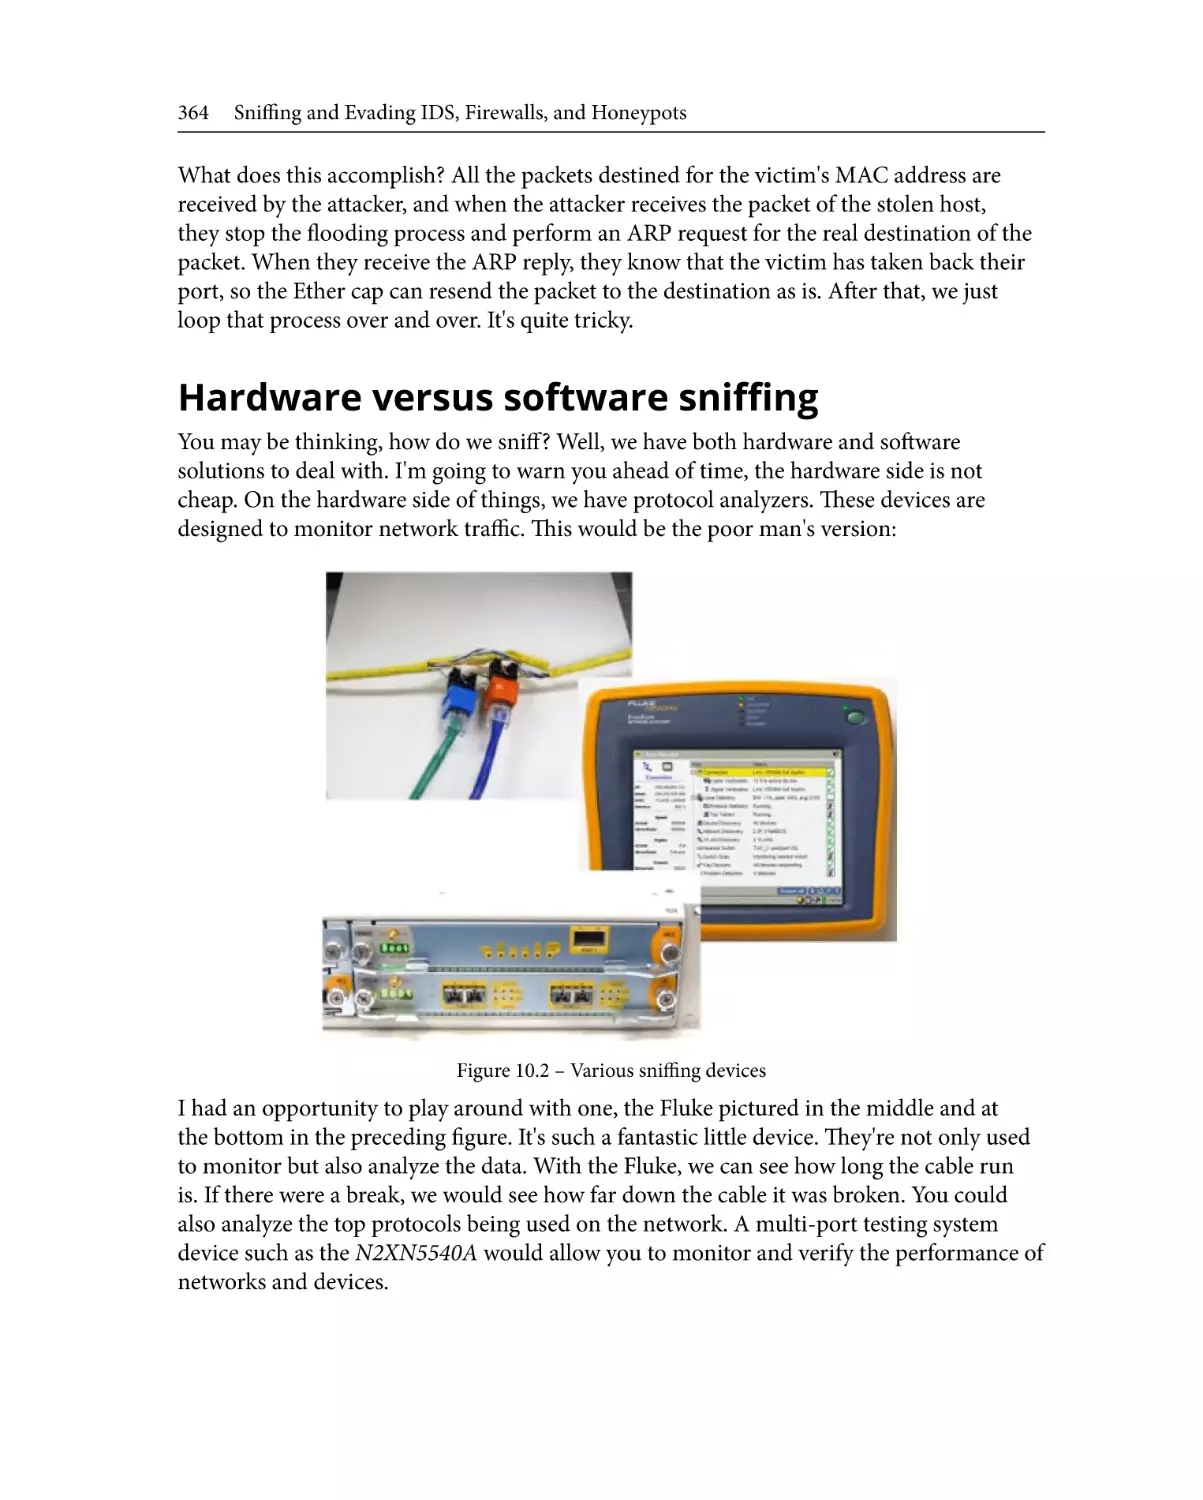 Hardware versus software sniffing